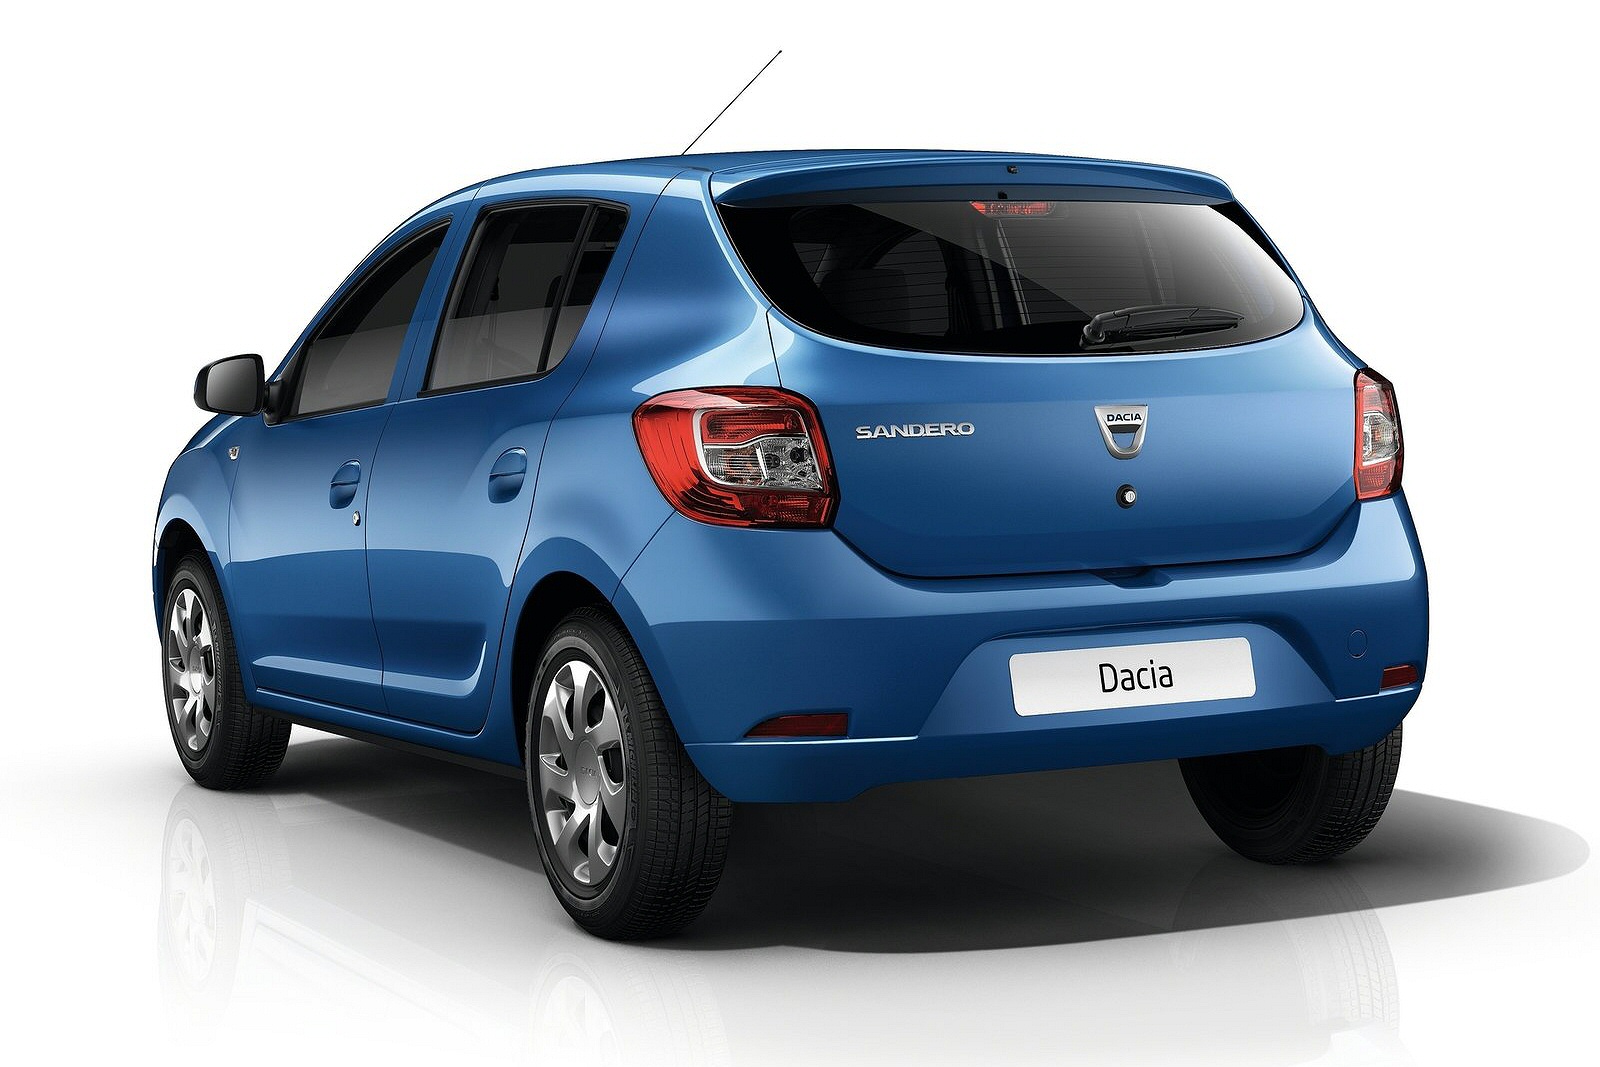 2014 Dacia Sandero Rear View